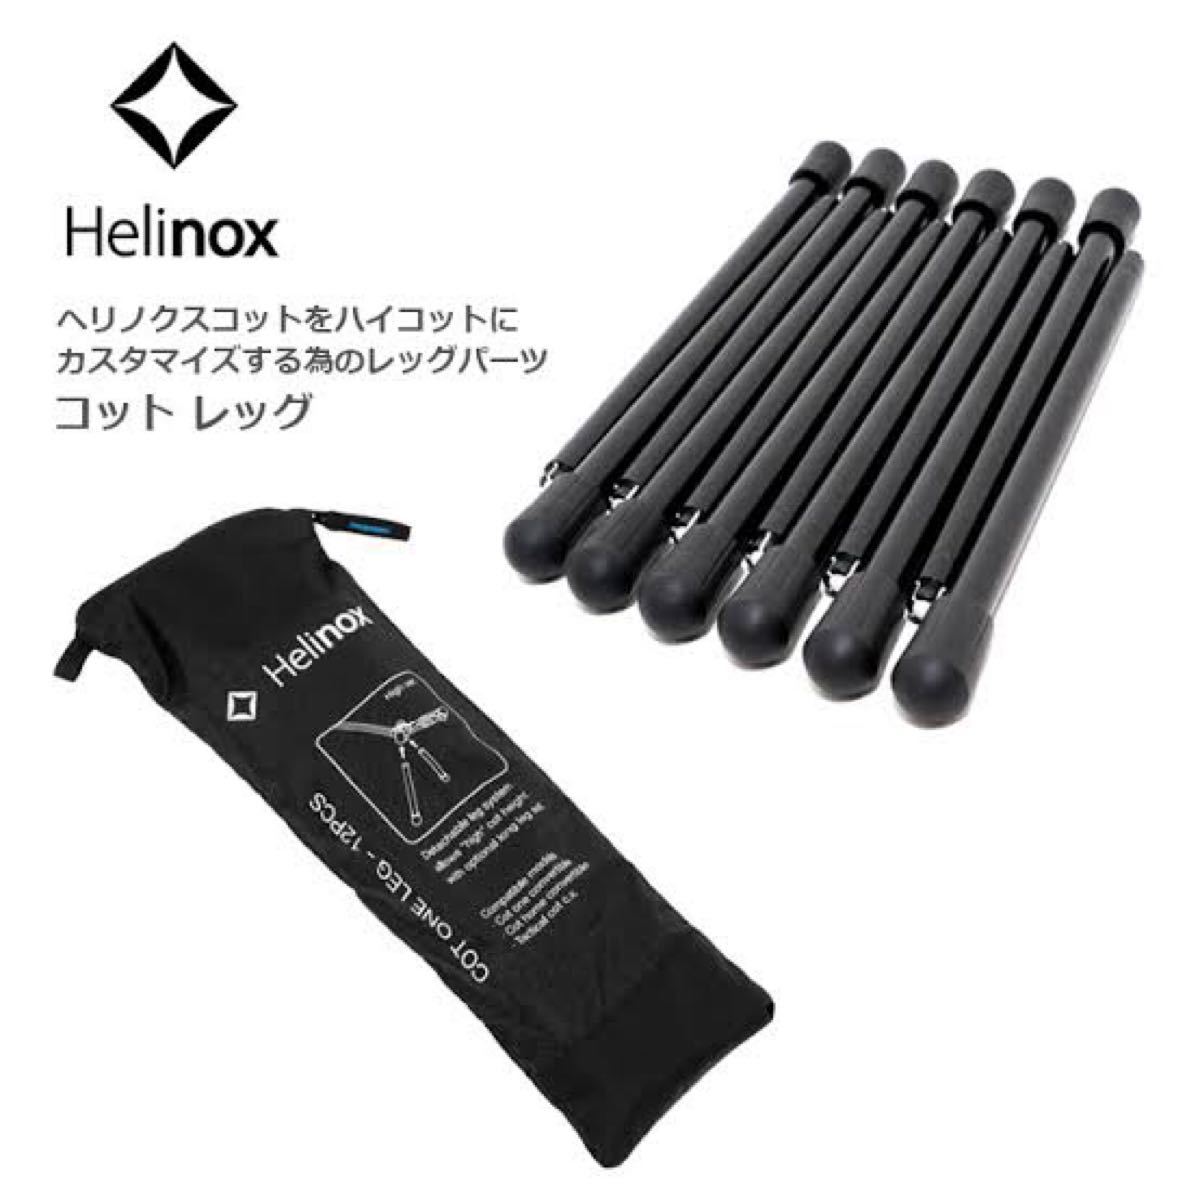 helinox コットレッグ 12本